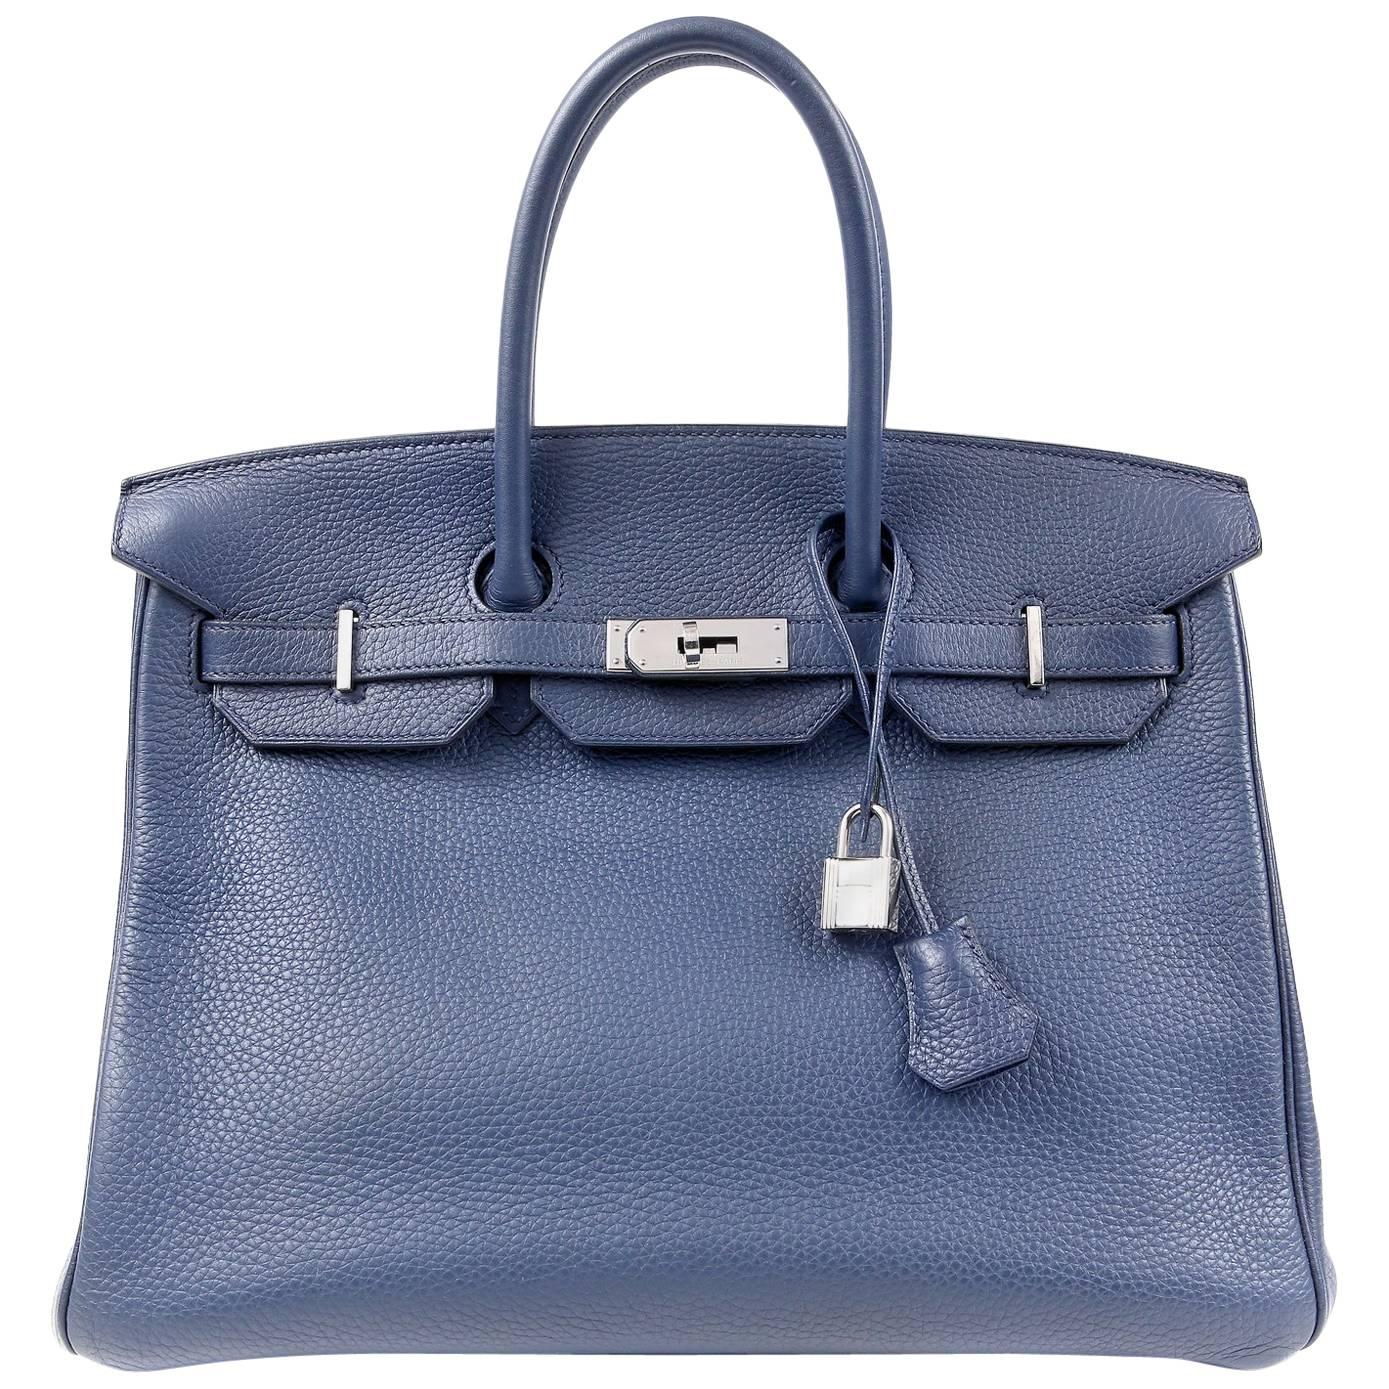 Hermès Indigo Blue Togo 35 cm Birkin Bag PHW